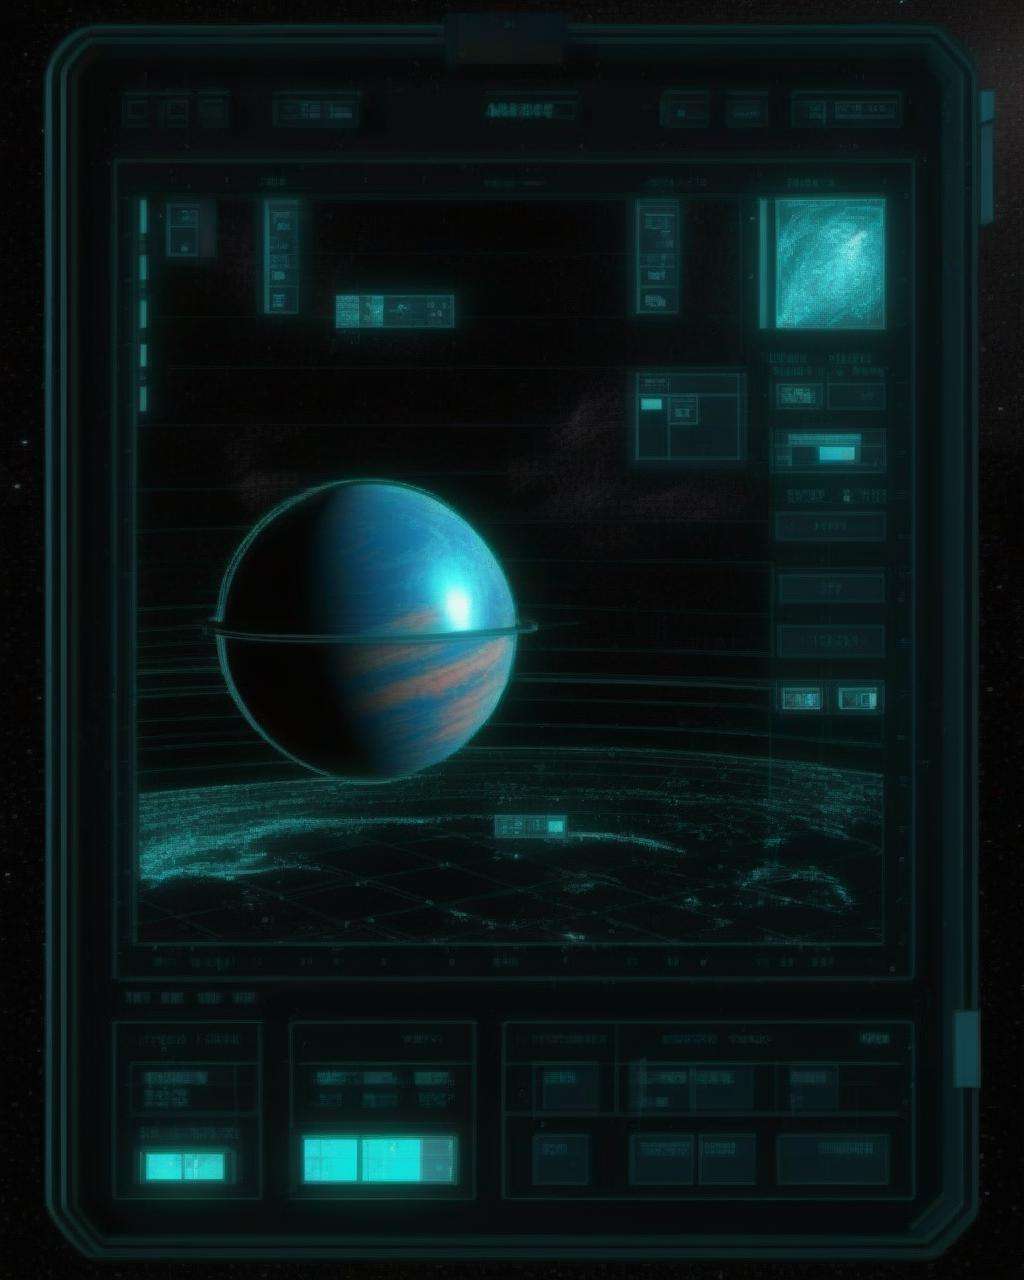 a 3d planet on a spacecraft interface, <lora:cyberui_sdxl:1.0>